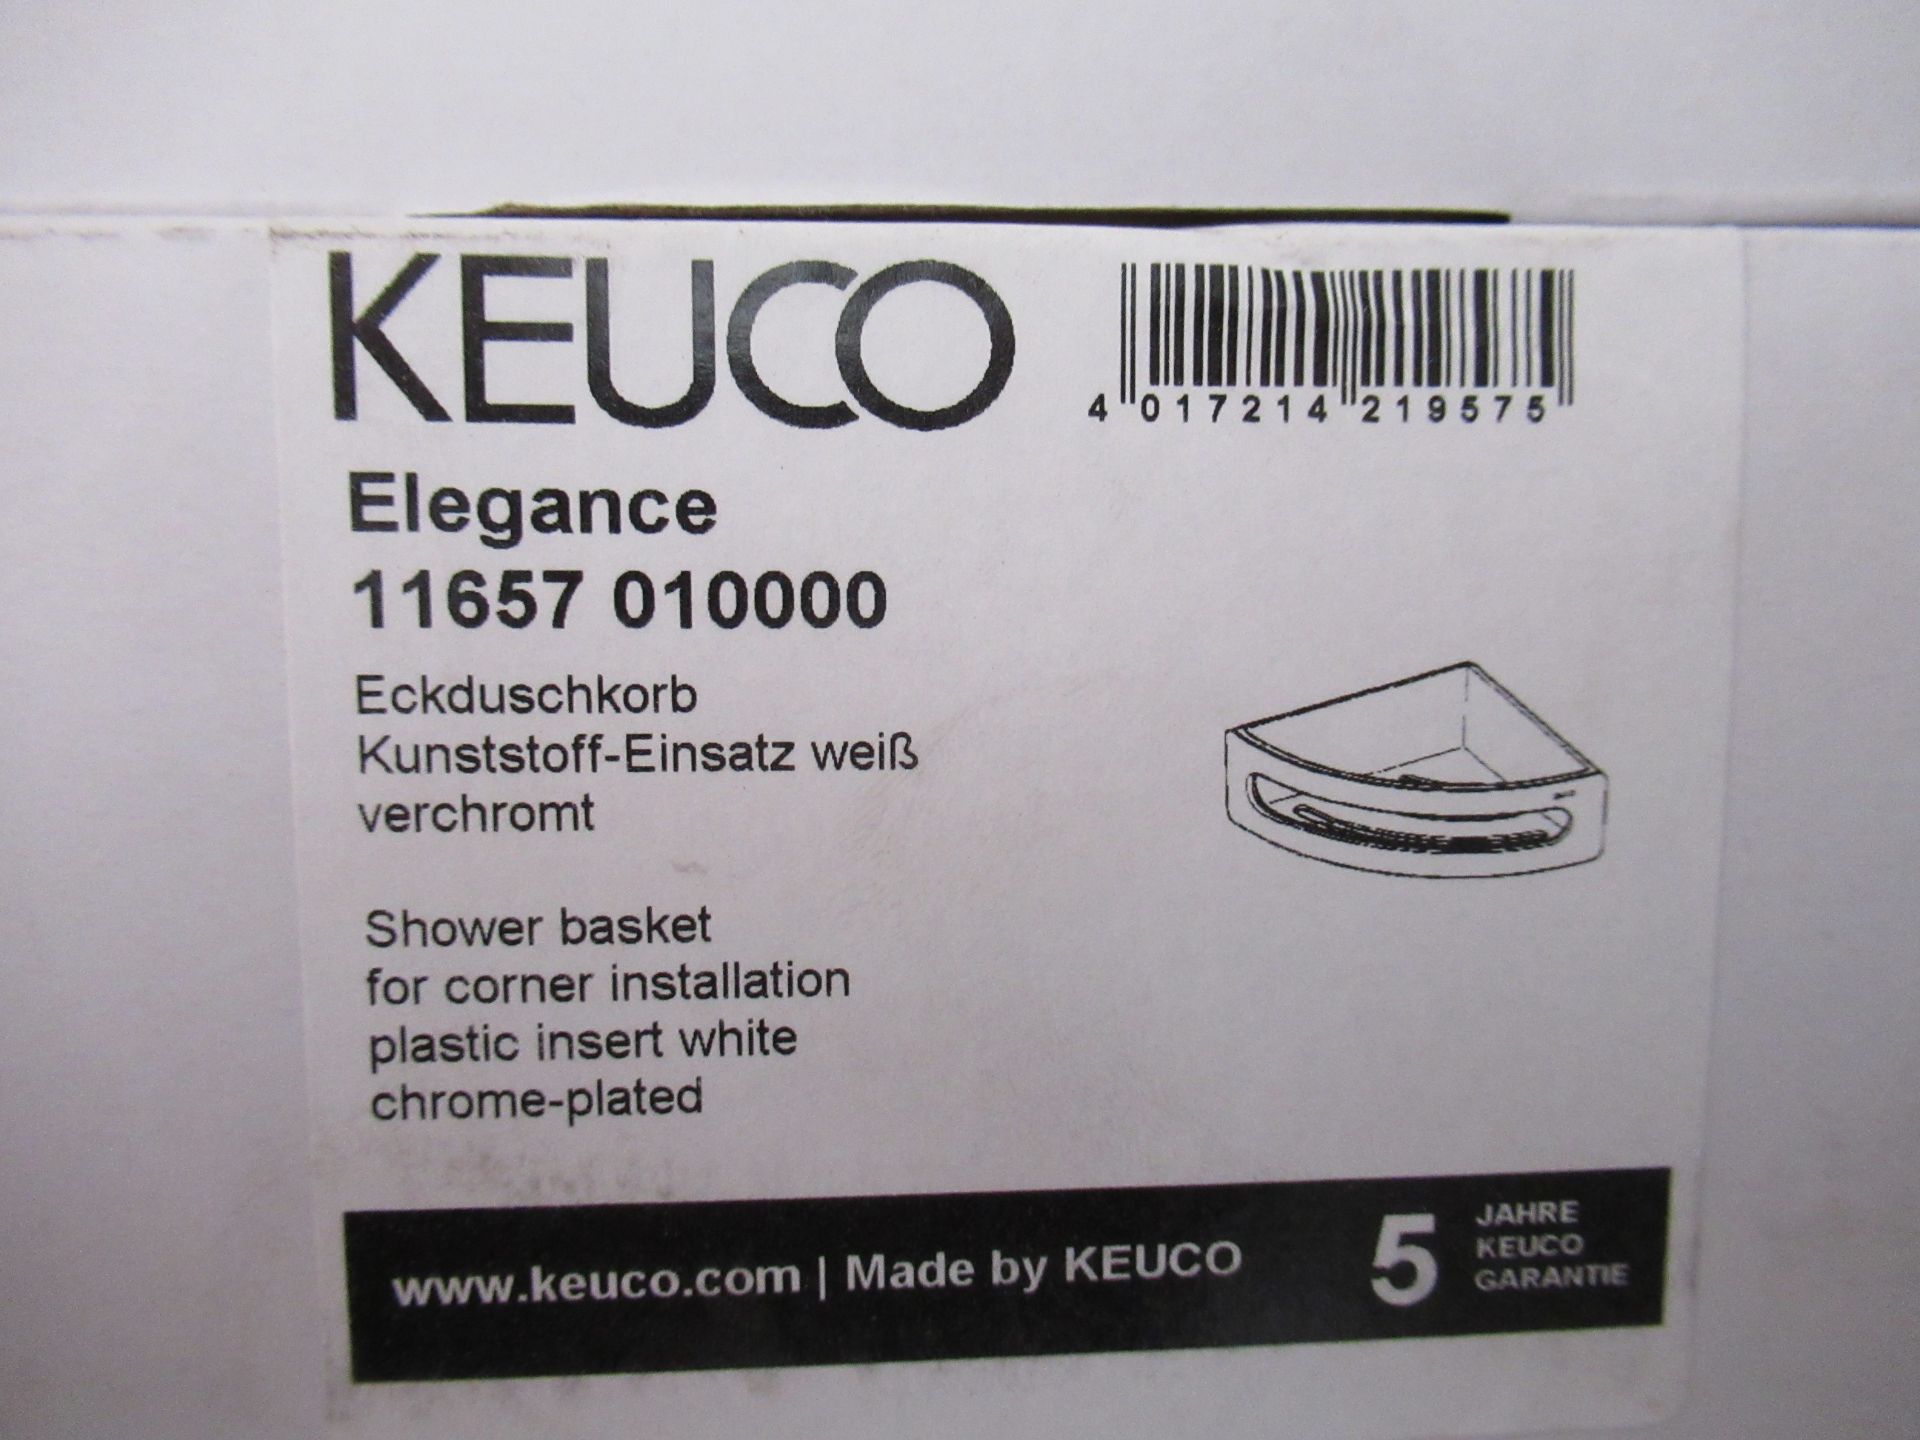 3 x Keuco Elegance Shower Basket, Chrome Plated, P/N 11657-010000 - Image 2 of 2